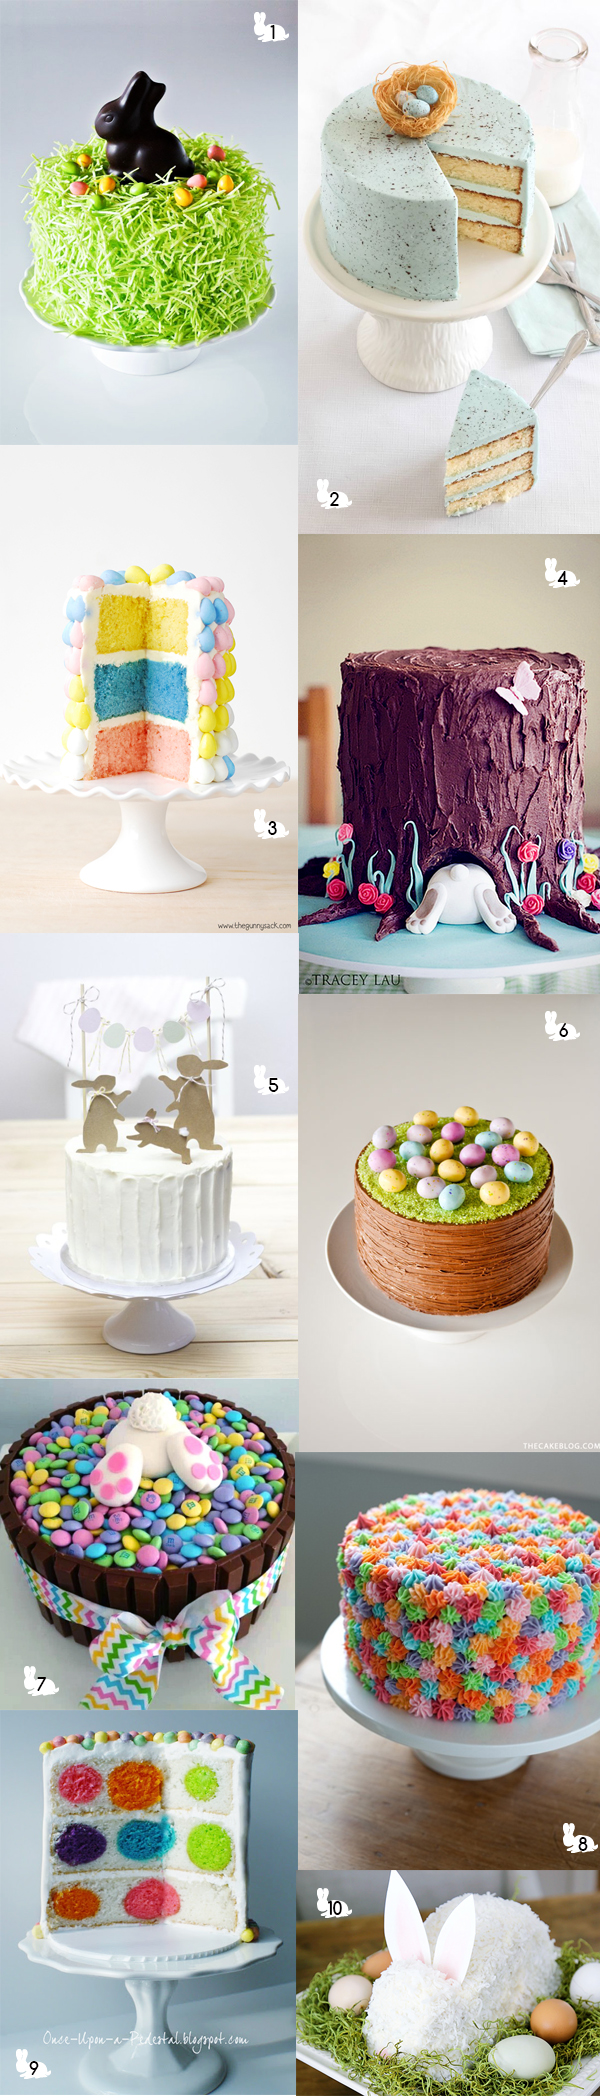 10-Amazing-Easter-Cakes